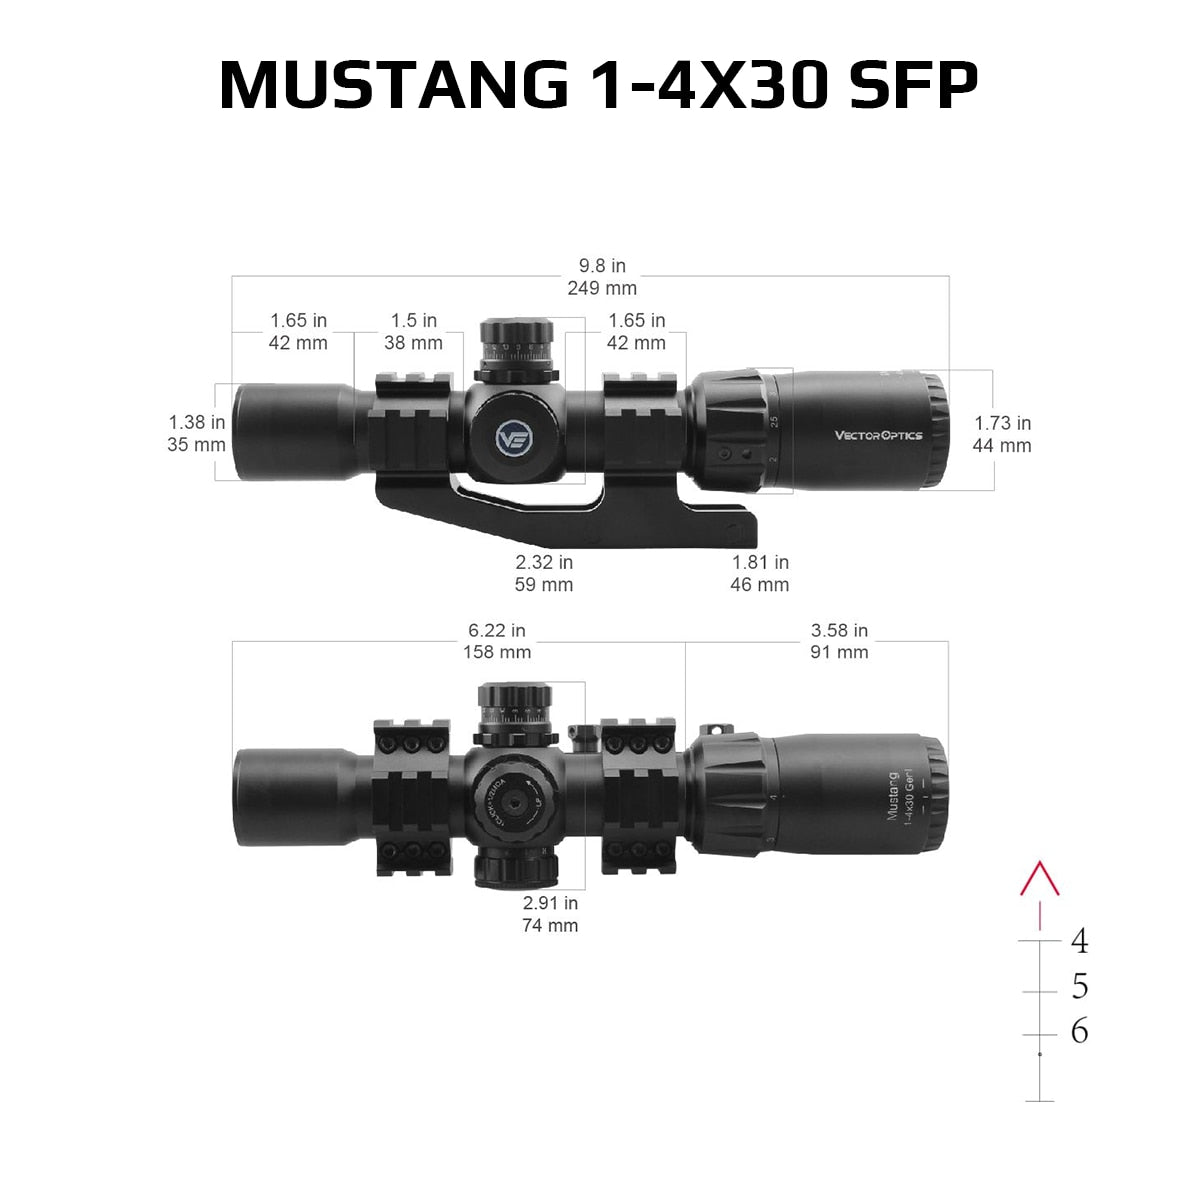 Vector Optics 1-4x24 1-6x24 SFP/FFP LPVO Riflescope Airguns Hunting CQB